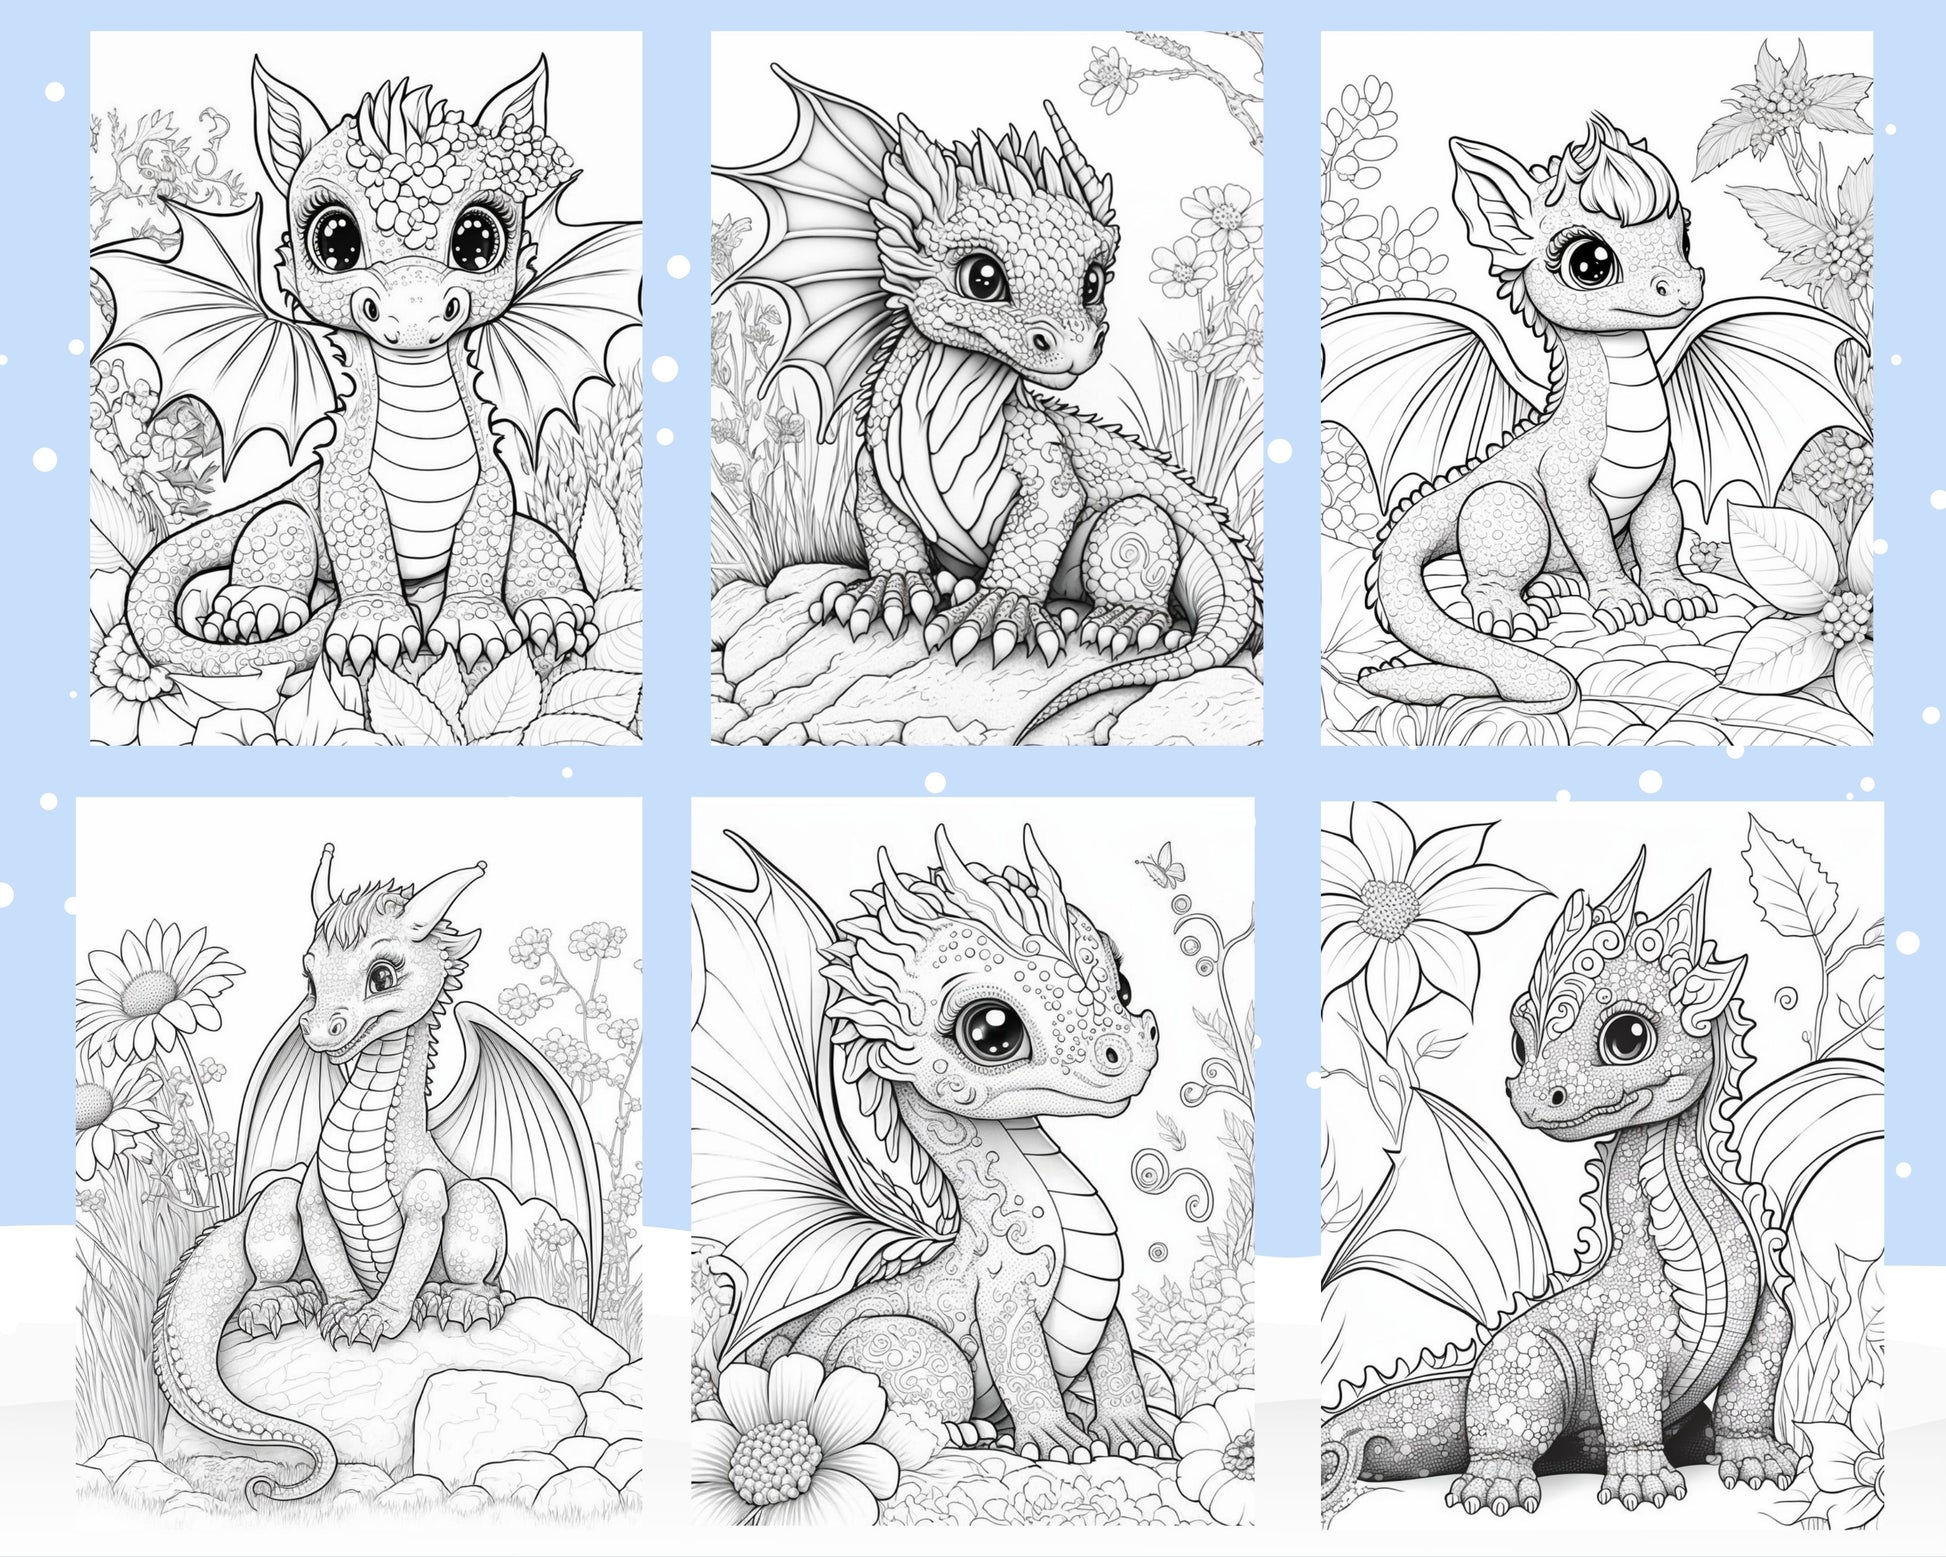 Adorable dragon printable coloring pages for kids printable pdf f â coloring